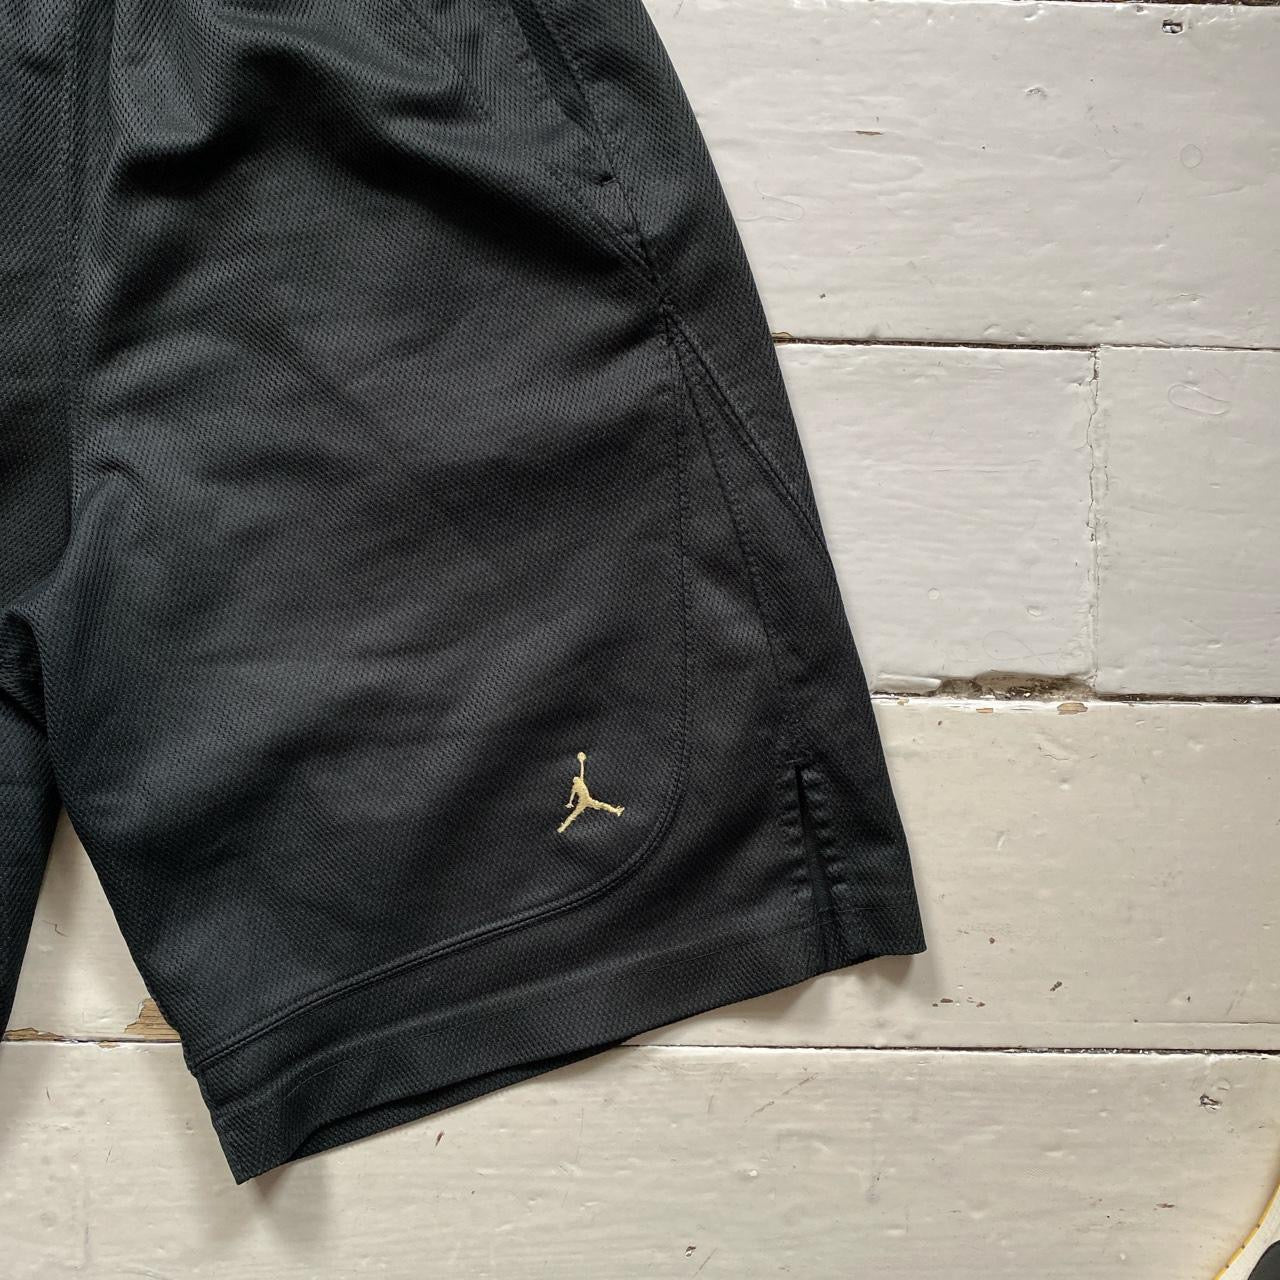 Jordan Black Basketball Shorts (Small)